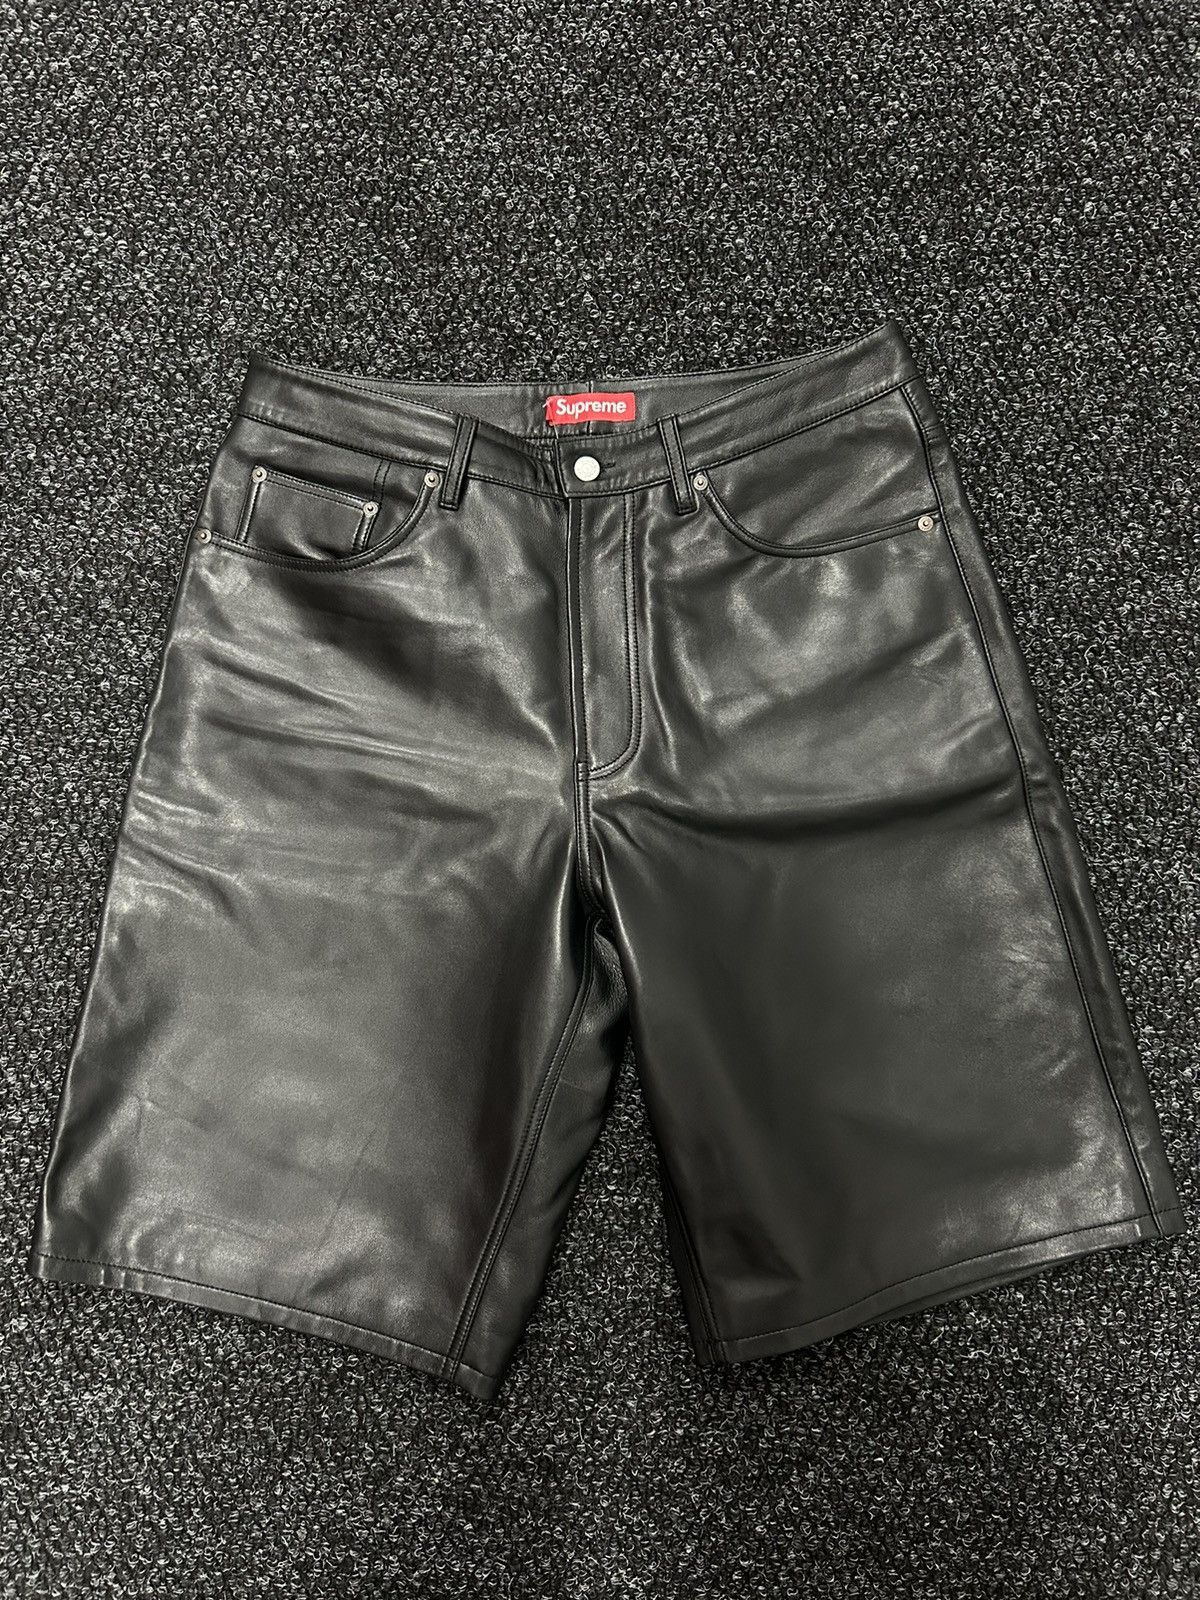 Supreme Supreme Baggy Leather Shorts | Grailed